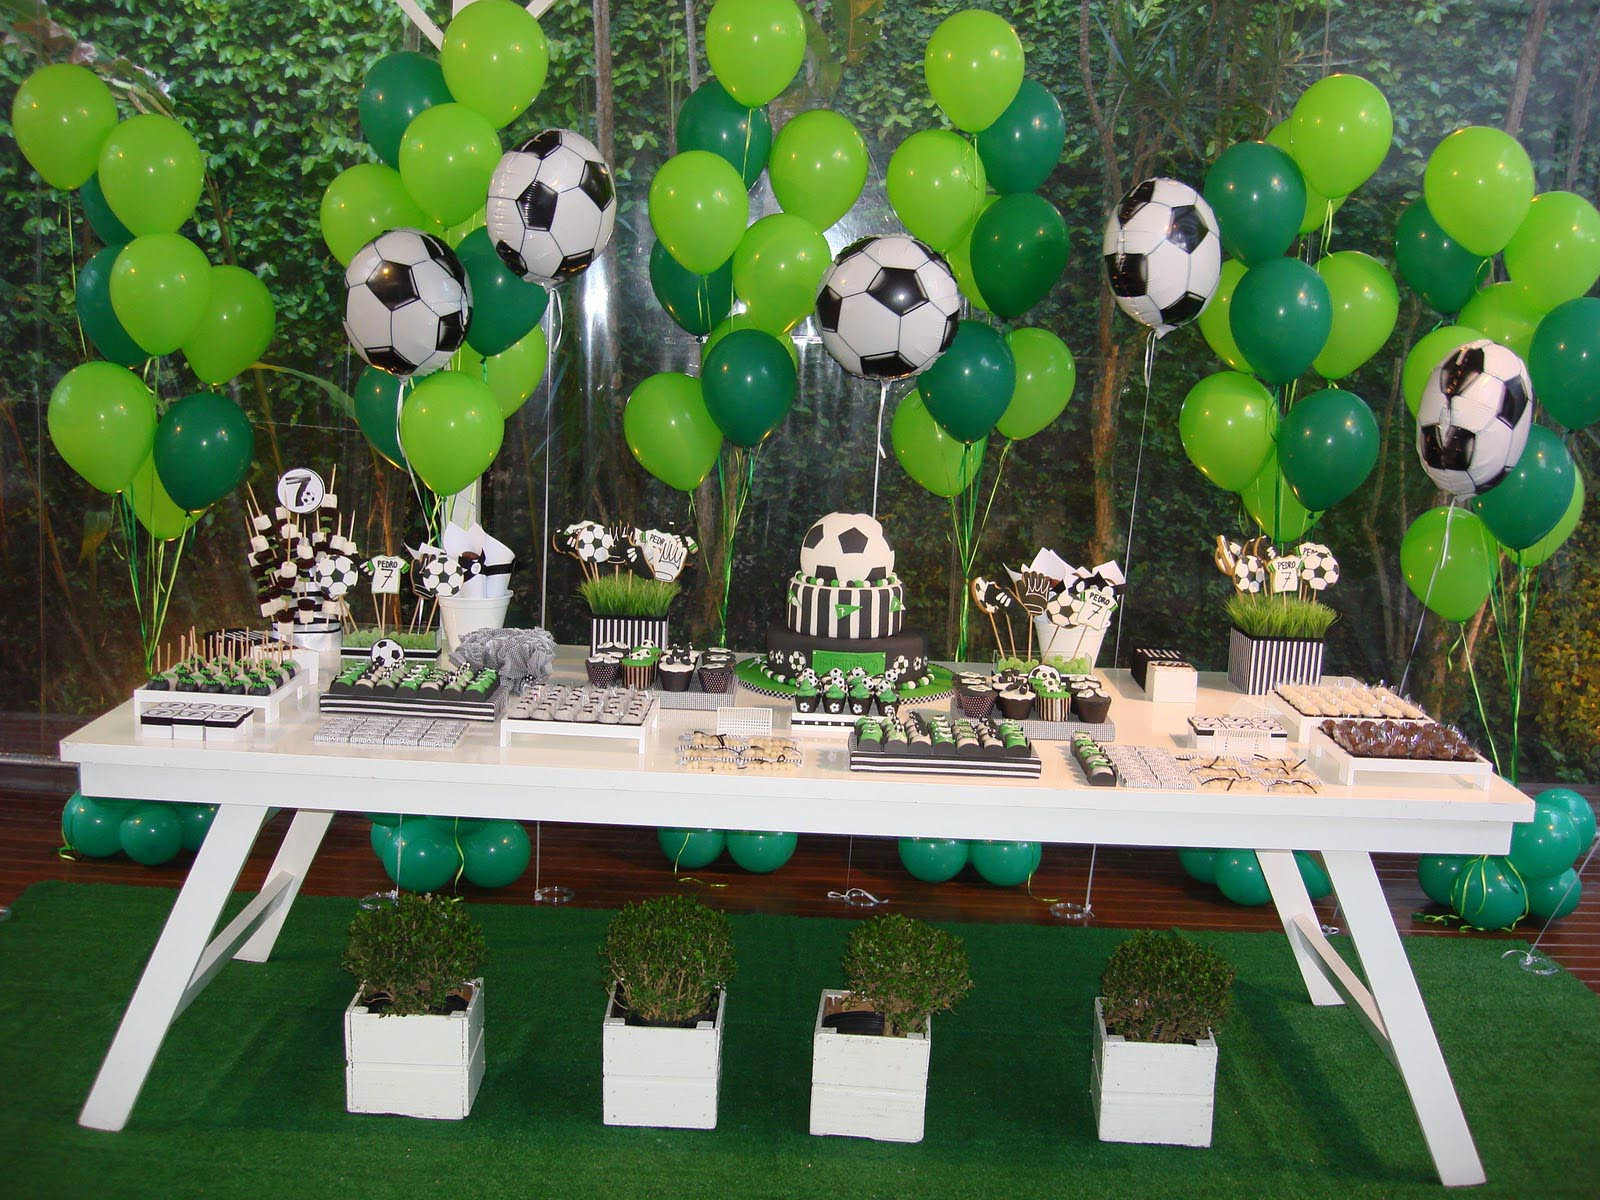 Soccer Birthday Party Ideas
 Soccer Birthday Party Favor Ideas